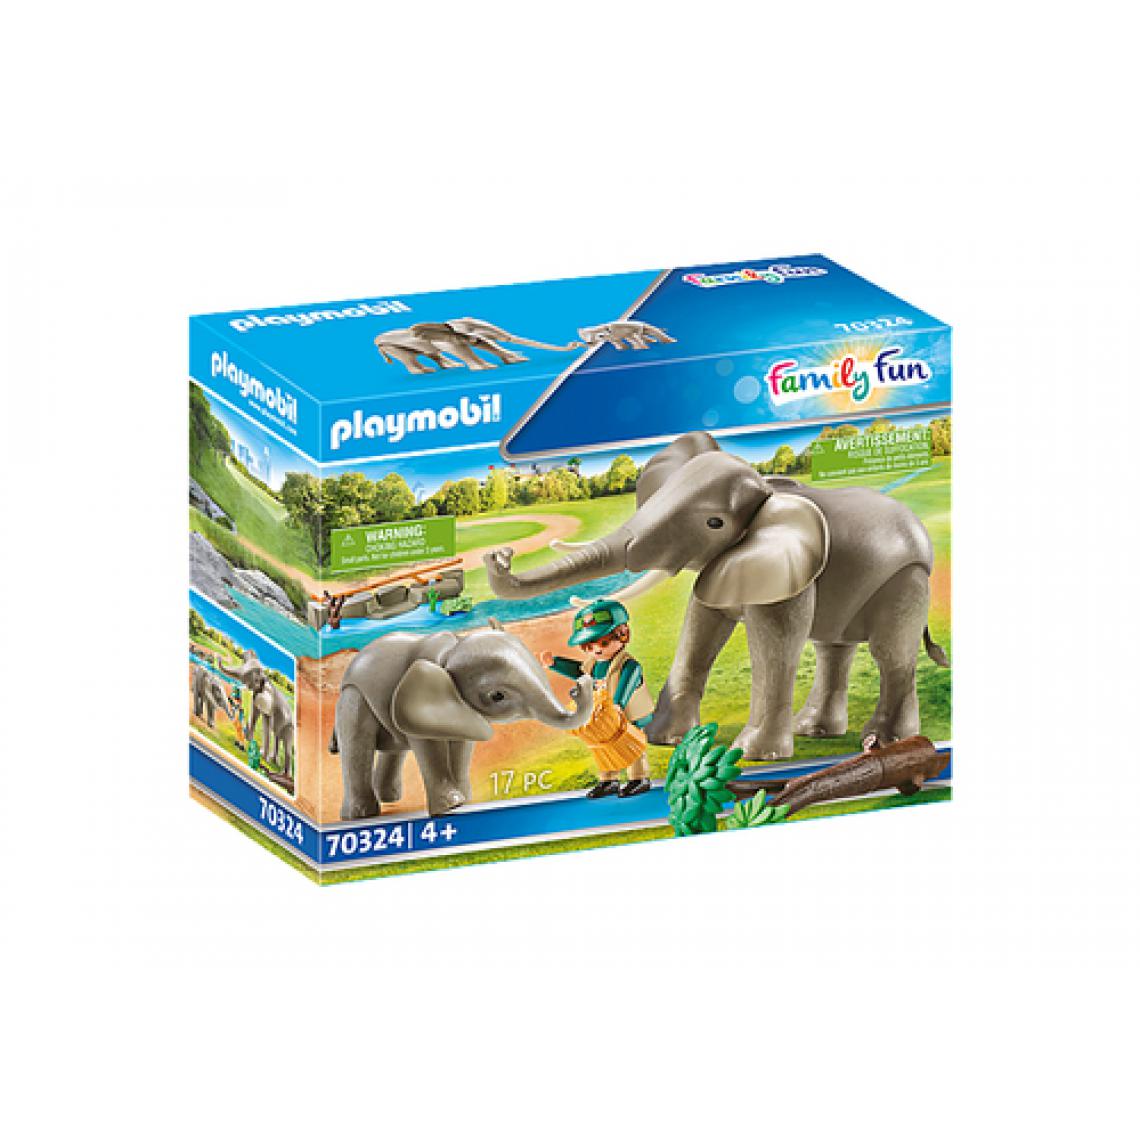 Playmobil - 70324 Elephant et soigneur, Playmobil Family Fun - Playmobil